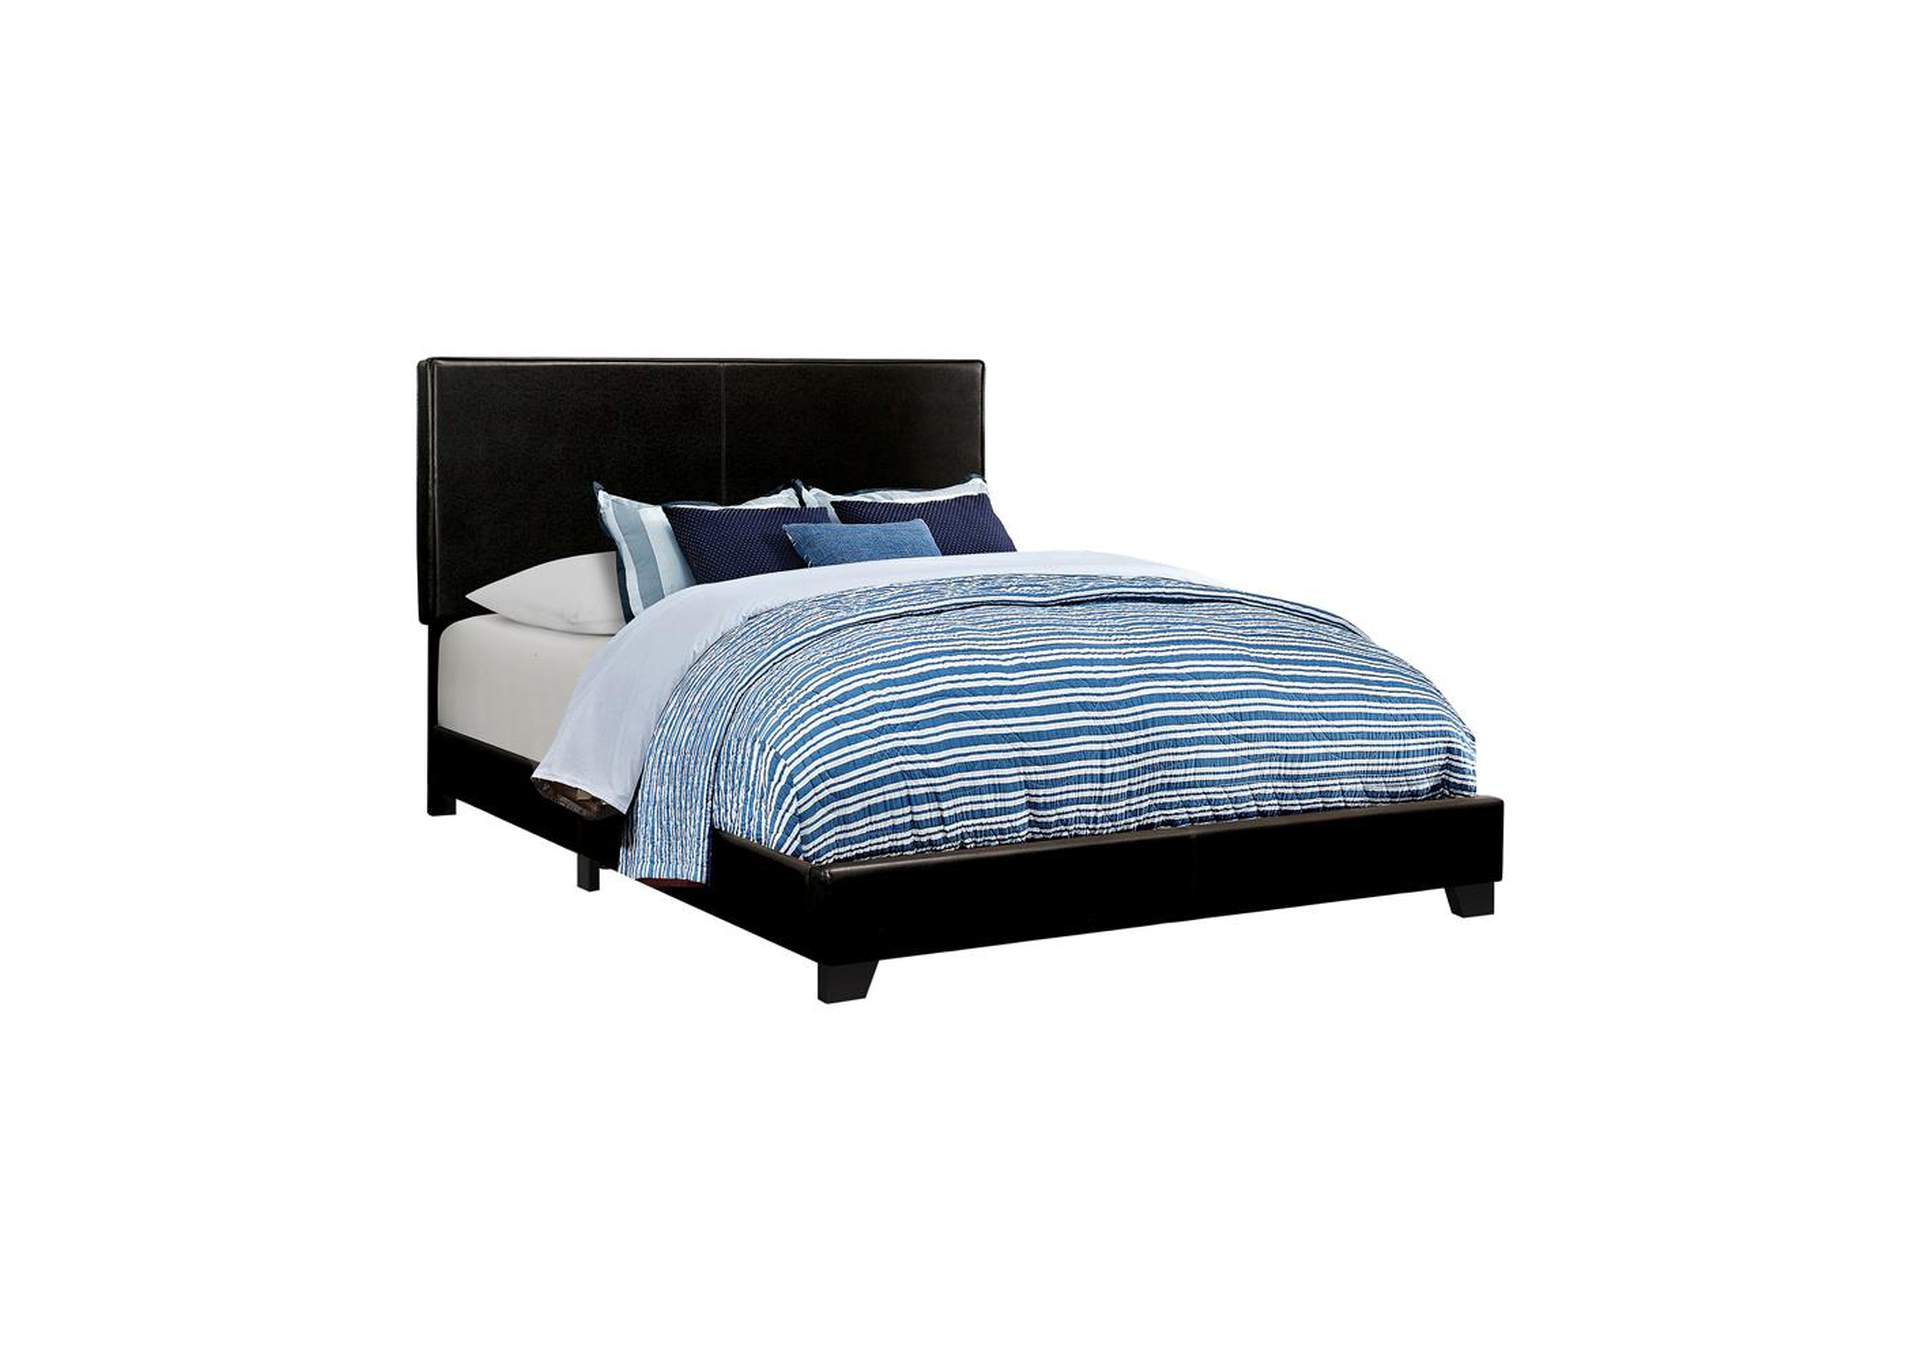 Black Dorian Black Faux Leather Upholstered Full Bed,Coaster Furniture